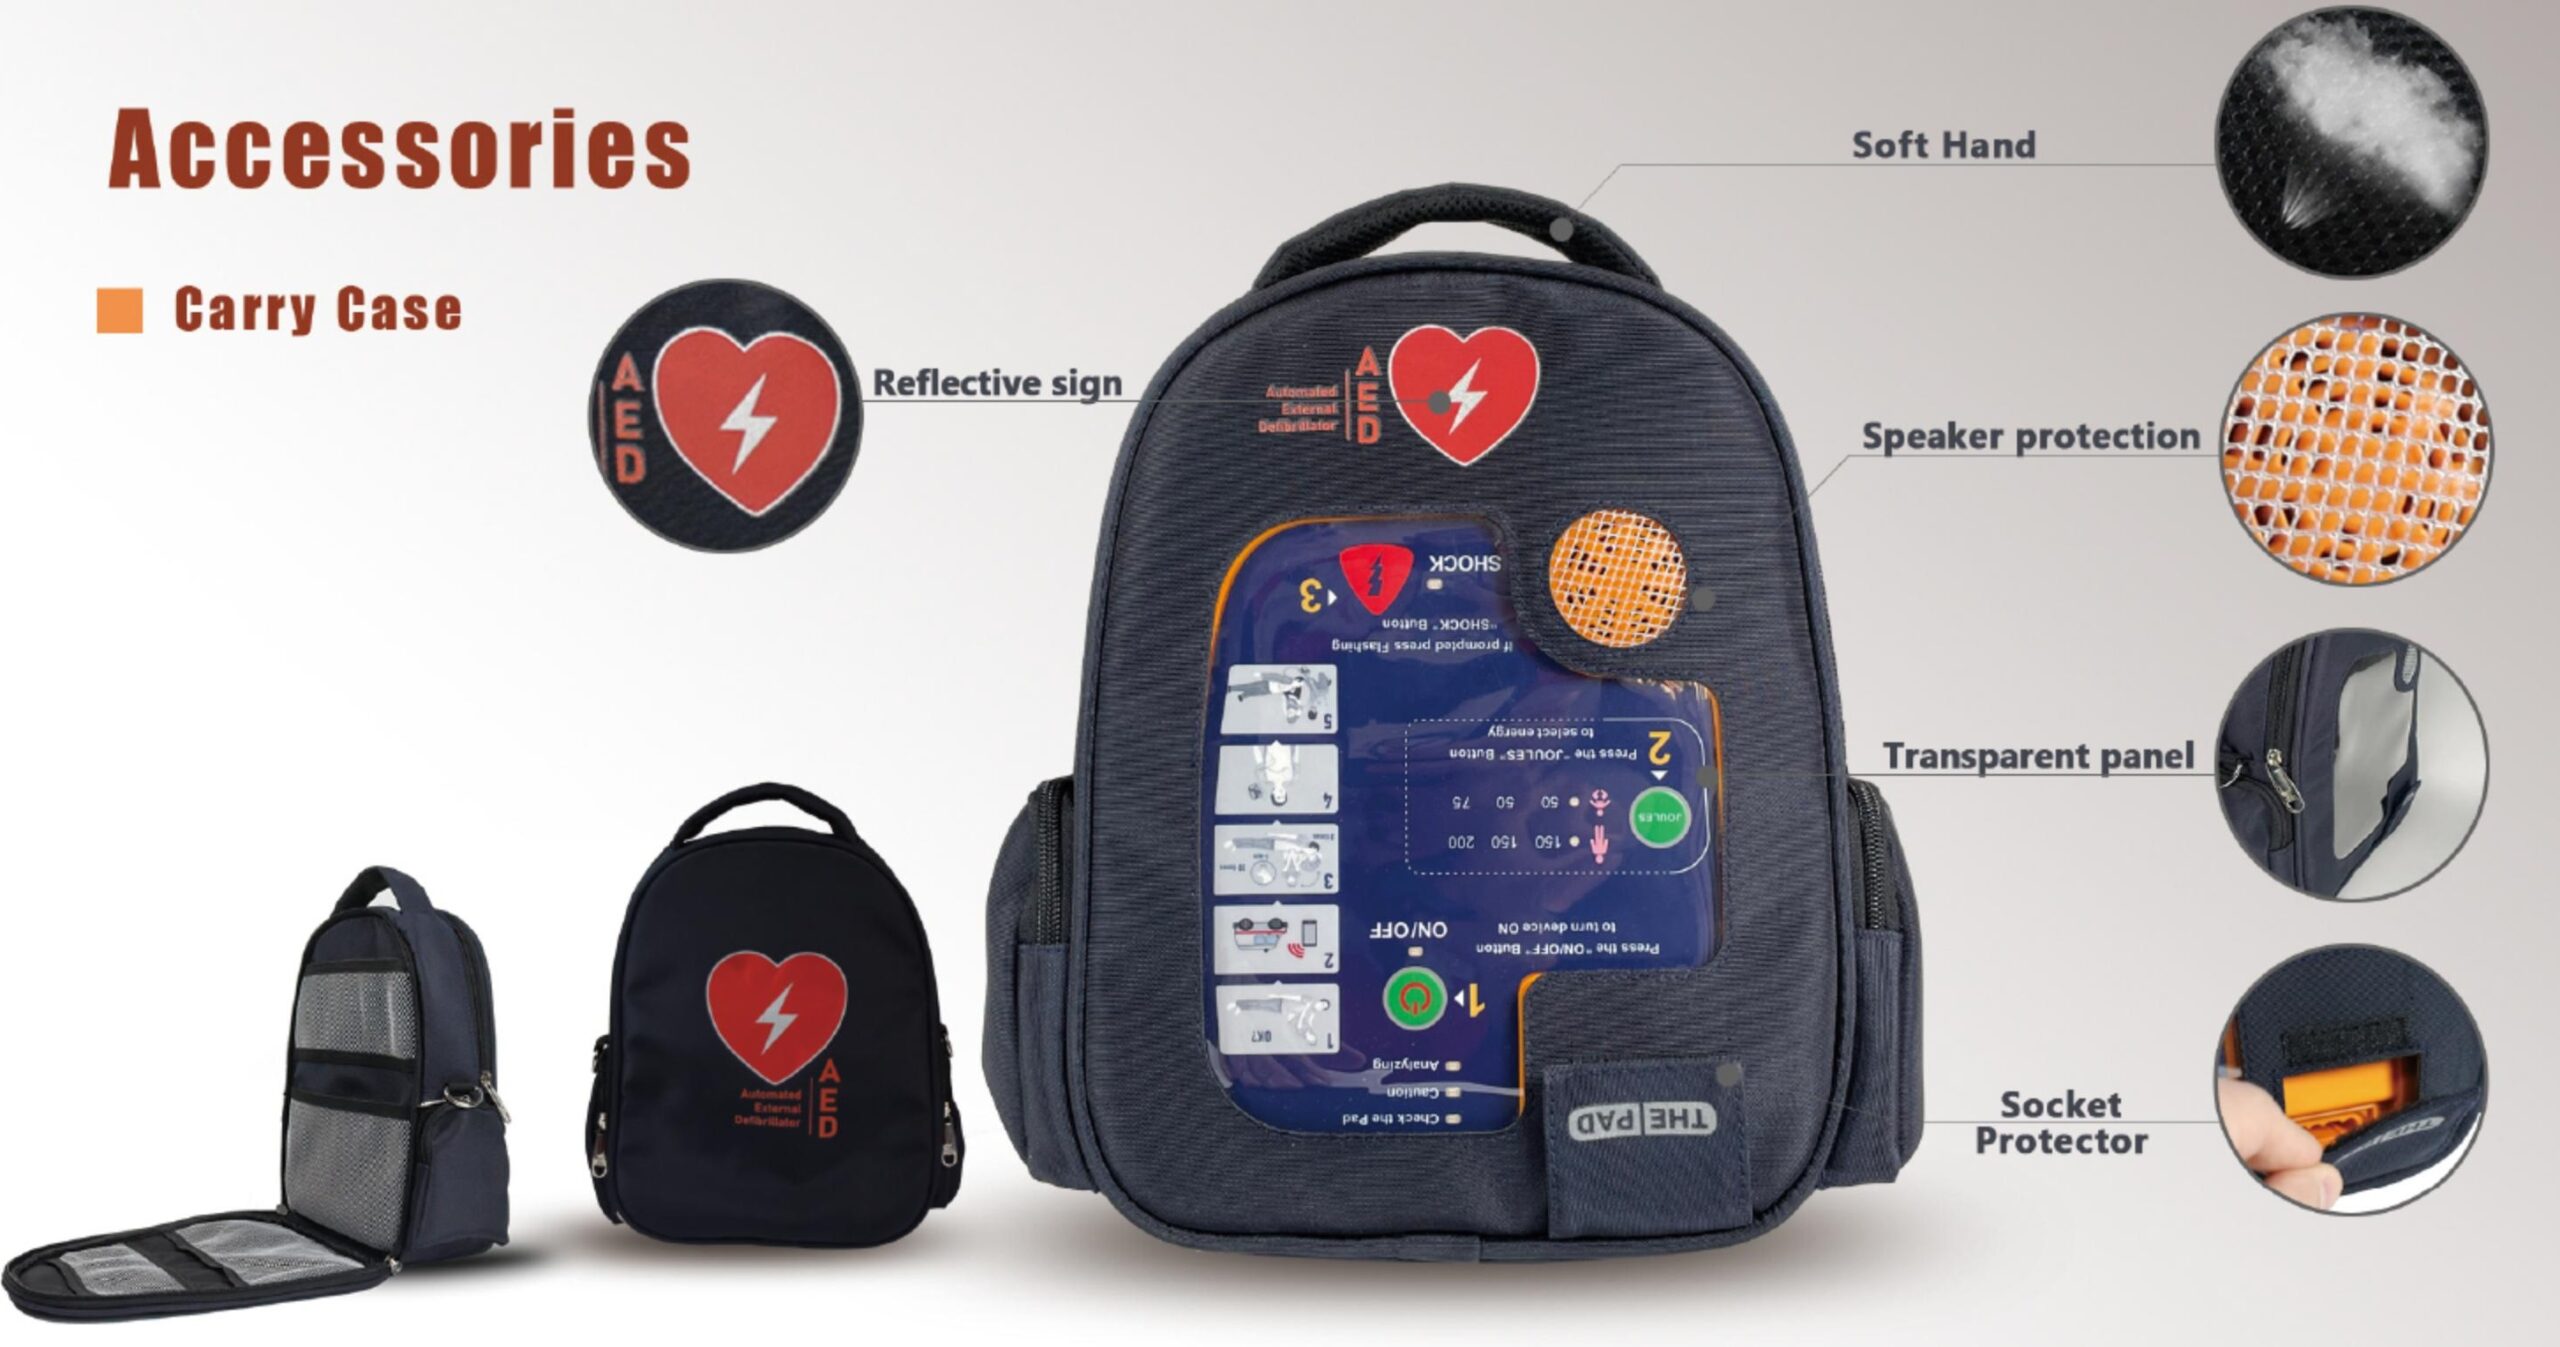 cardiac defibrillator, defibrillator 200 joules, aed carrying case